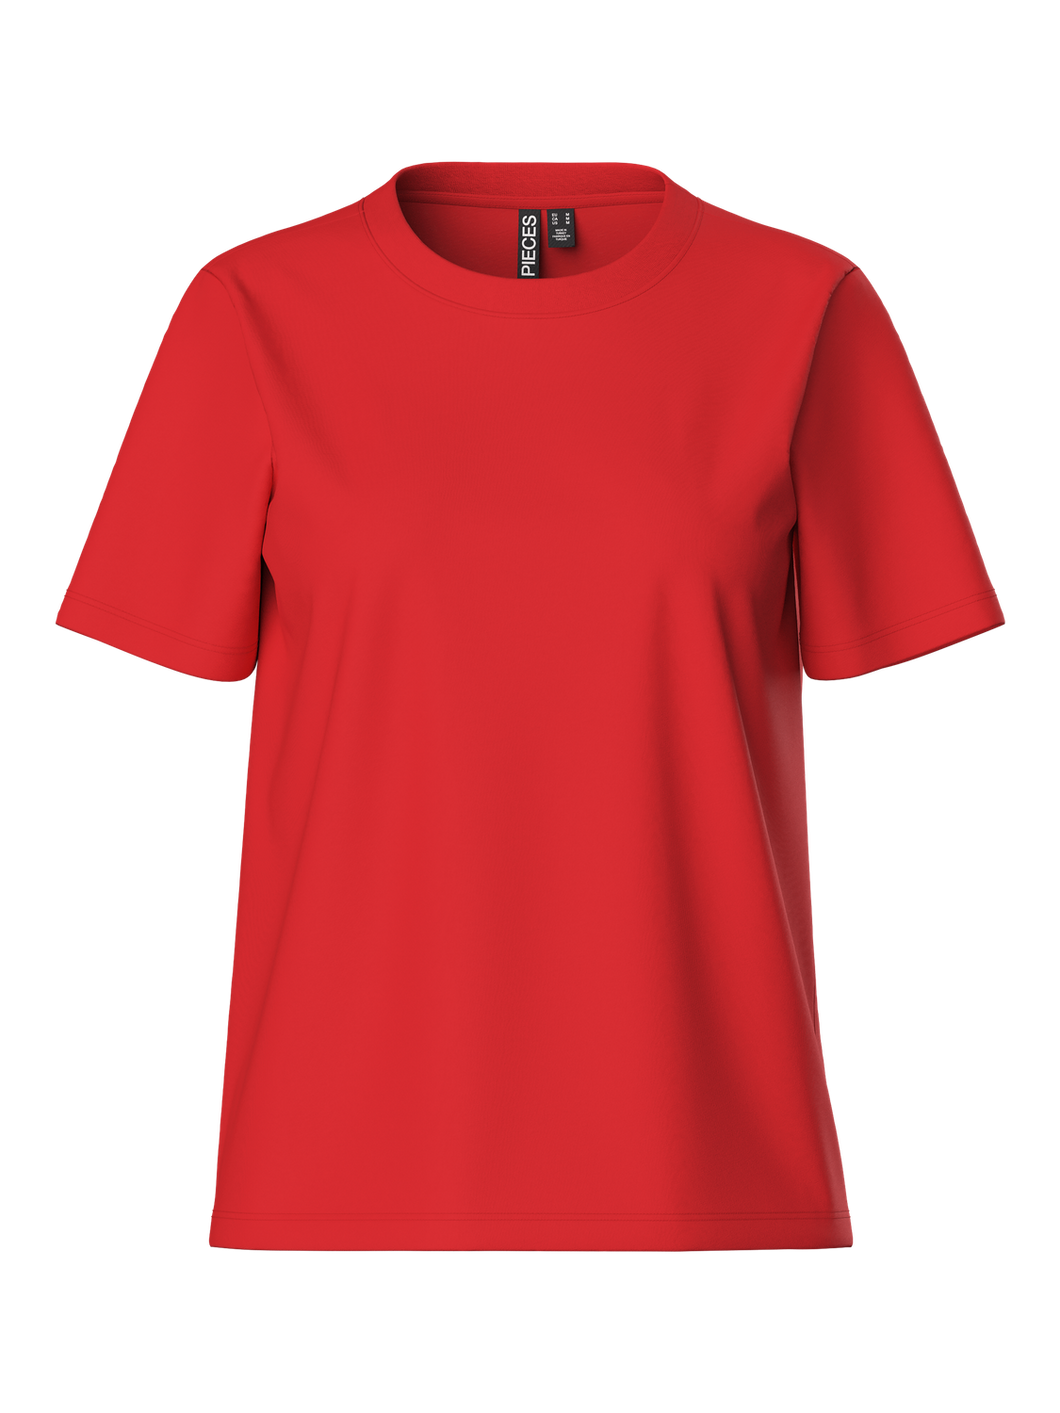 PCRIA T-Shirt - Poppy Red